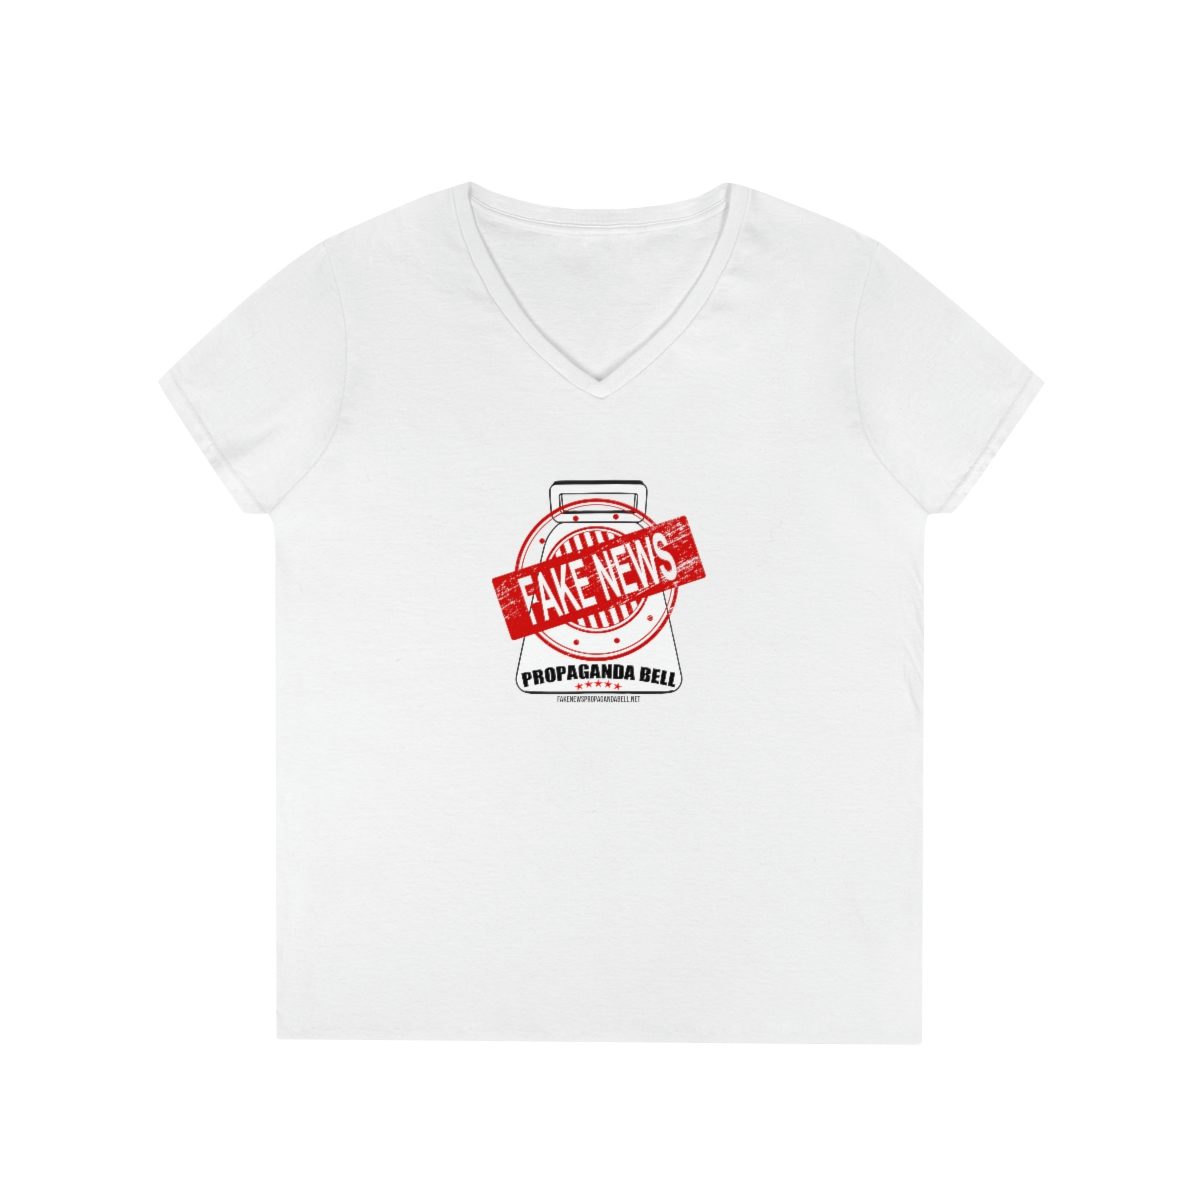 FAKE NEWS PROPAGANDA BELL LOGO  Ladies’ V-Neck T-Shirt